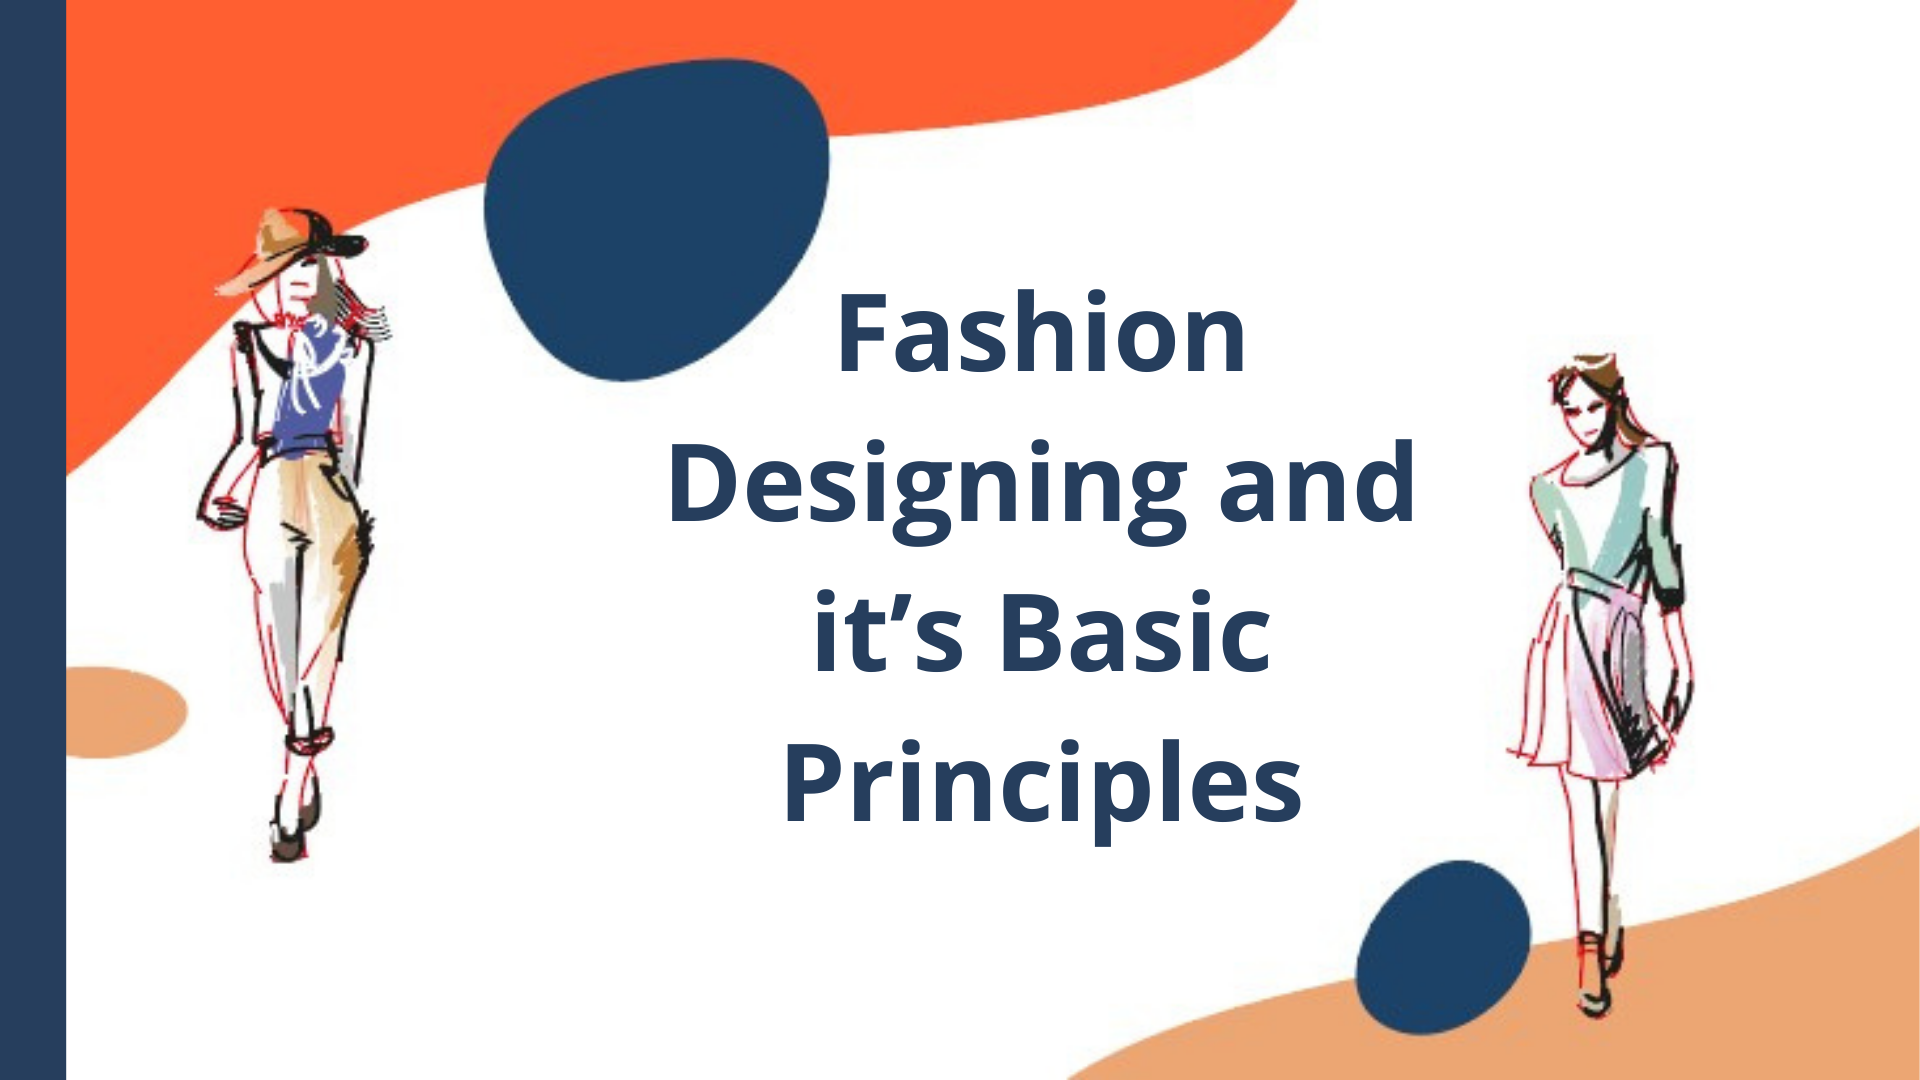 Fashion Designing and it’s Basic Principles